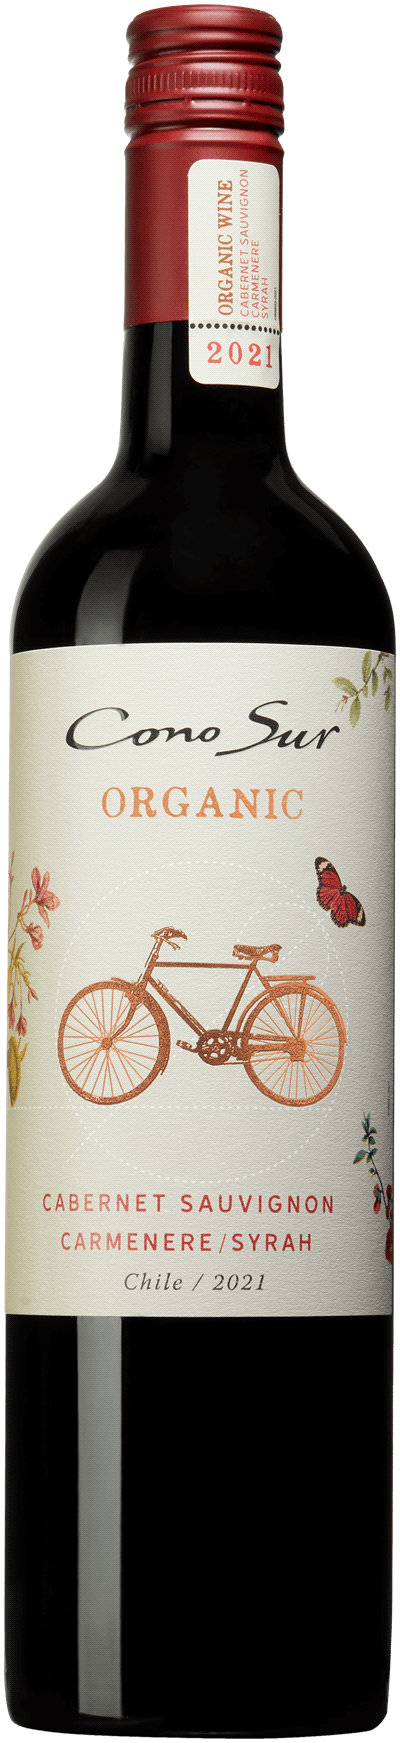 Produktbild för Cono Sur